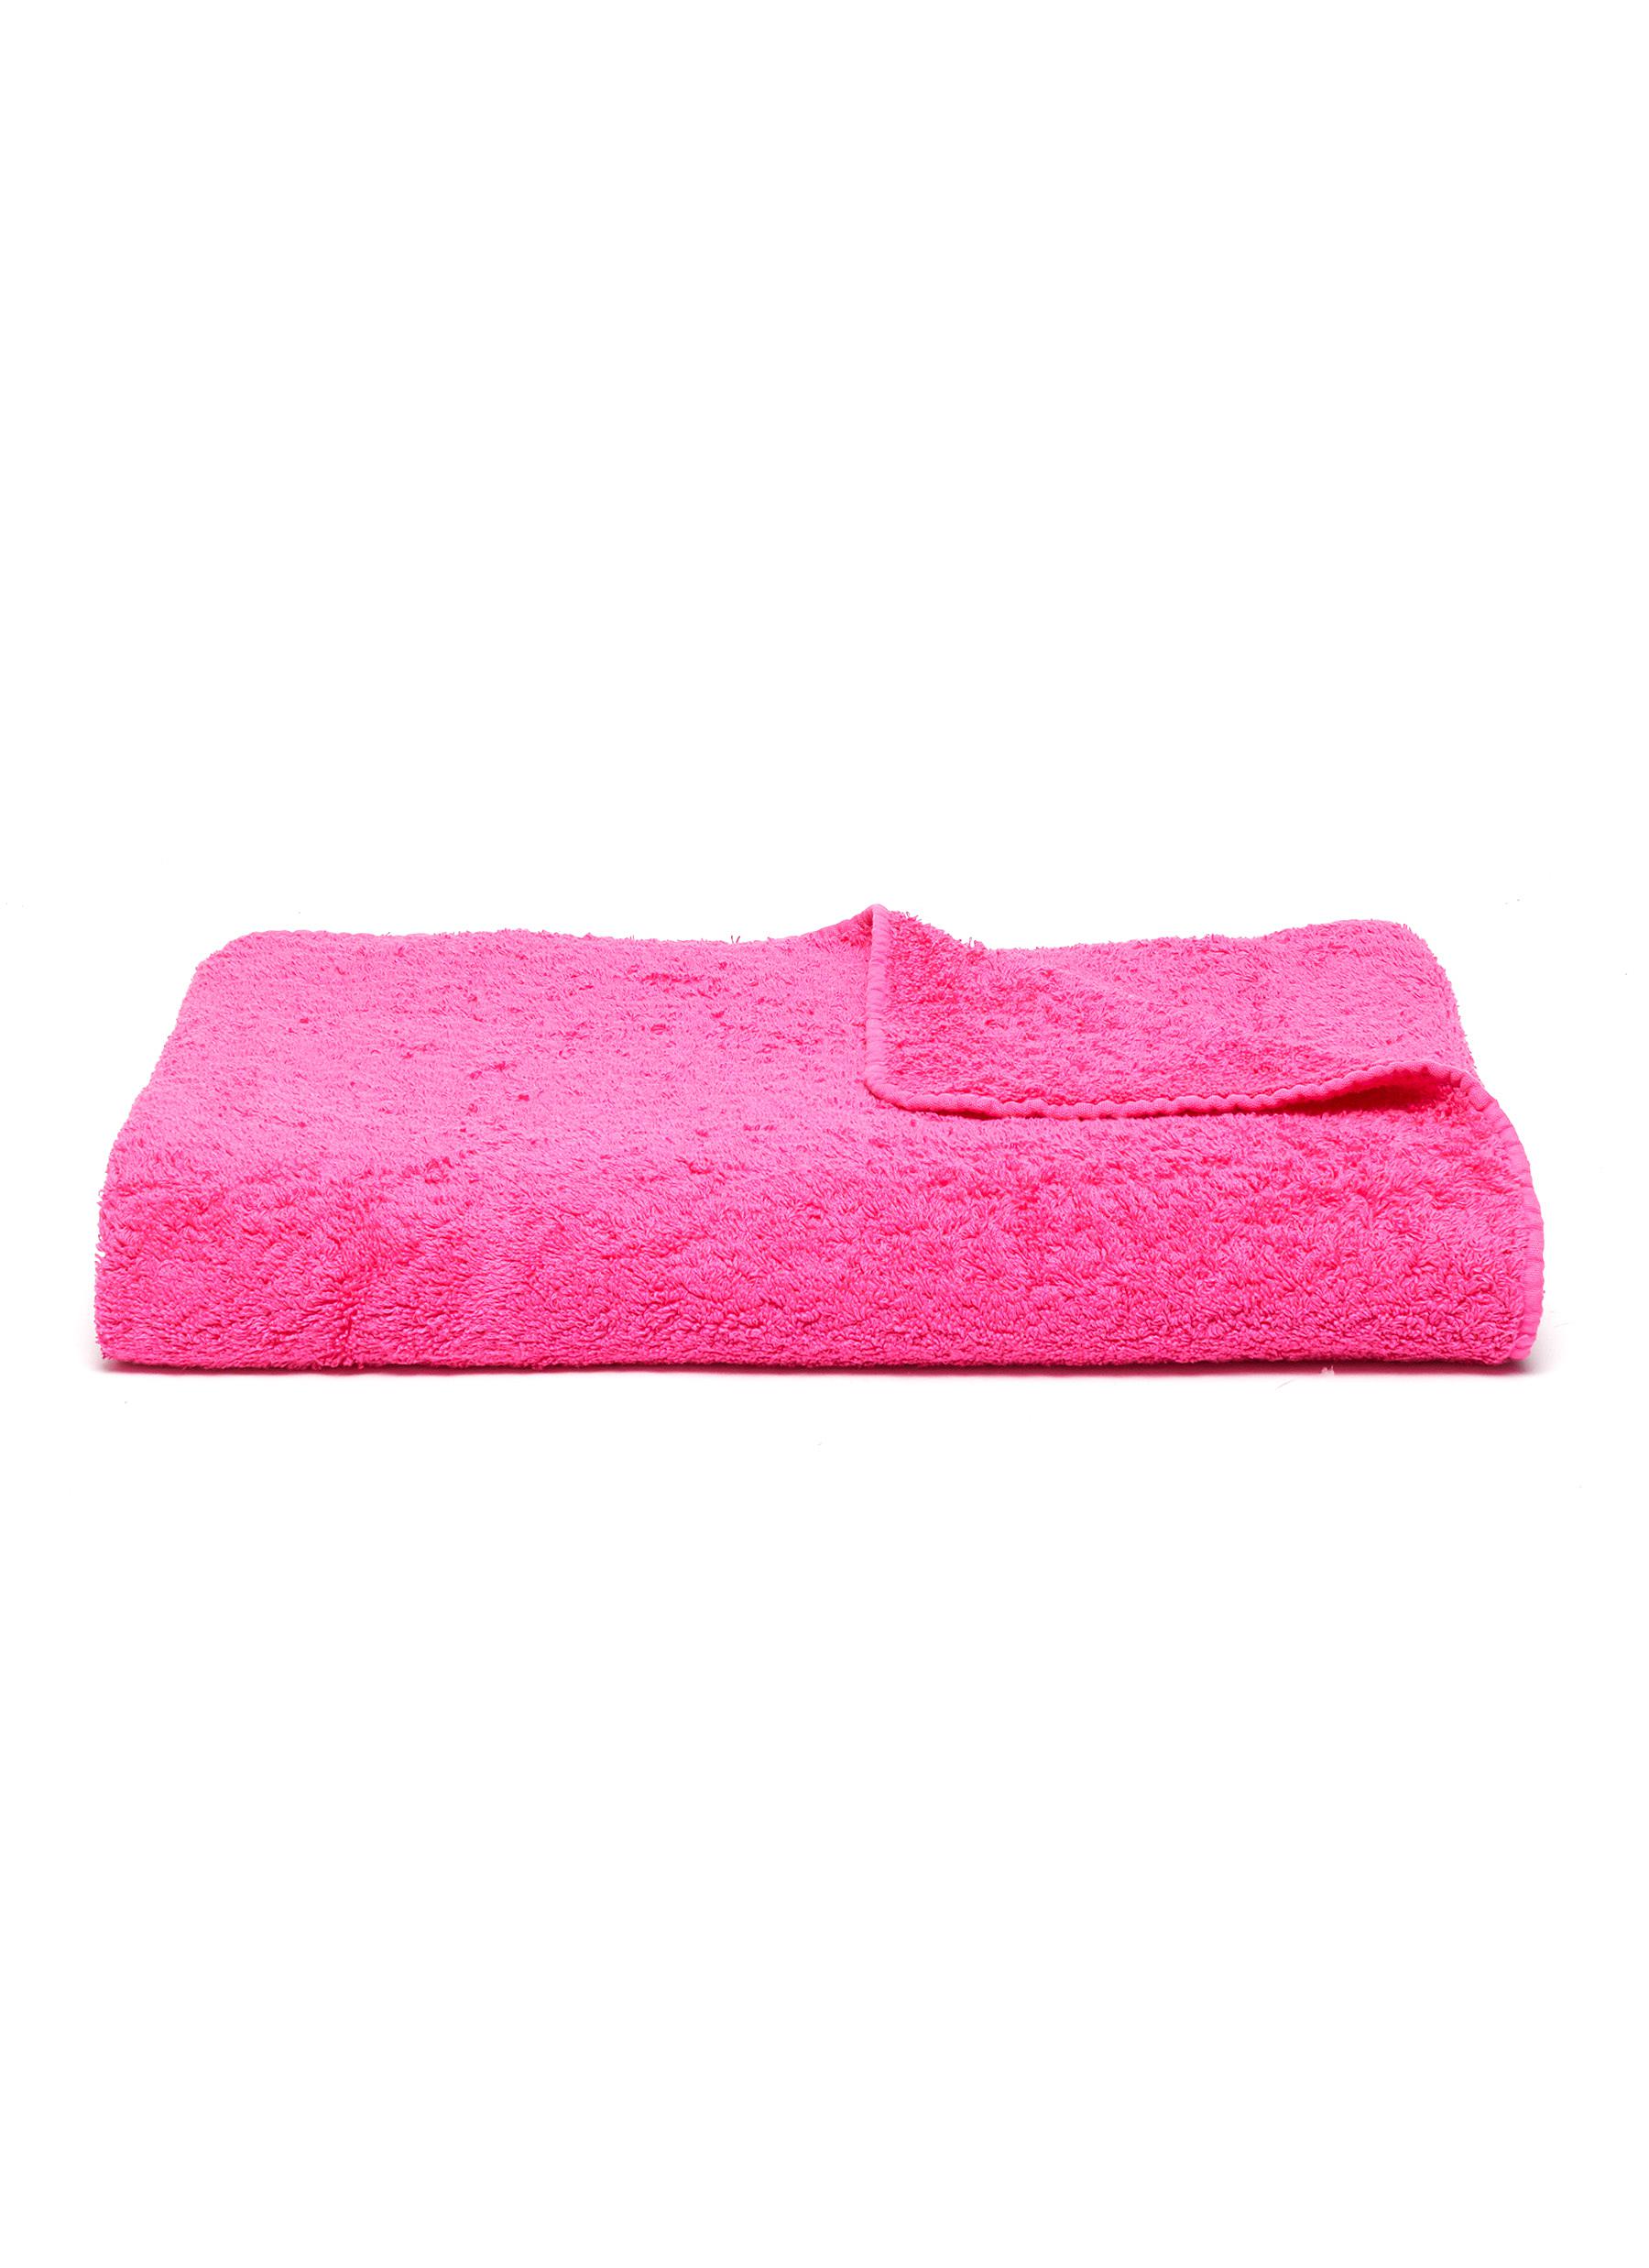 Abyss Super Pile Cotton Bath Sheet - Happy Pink